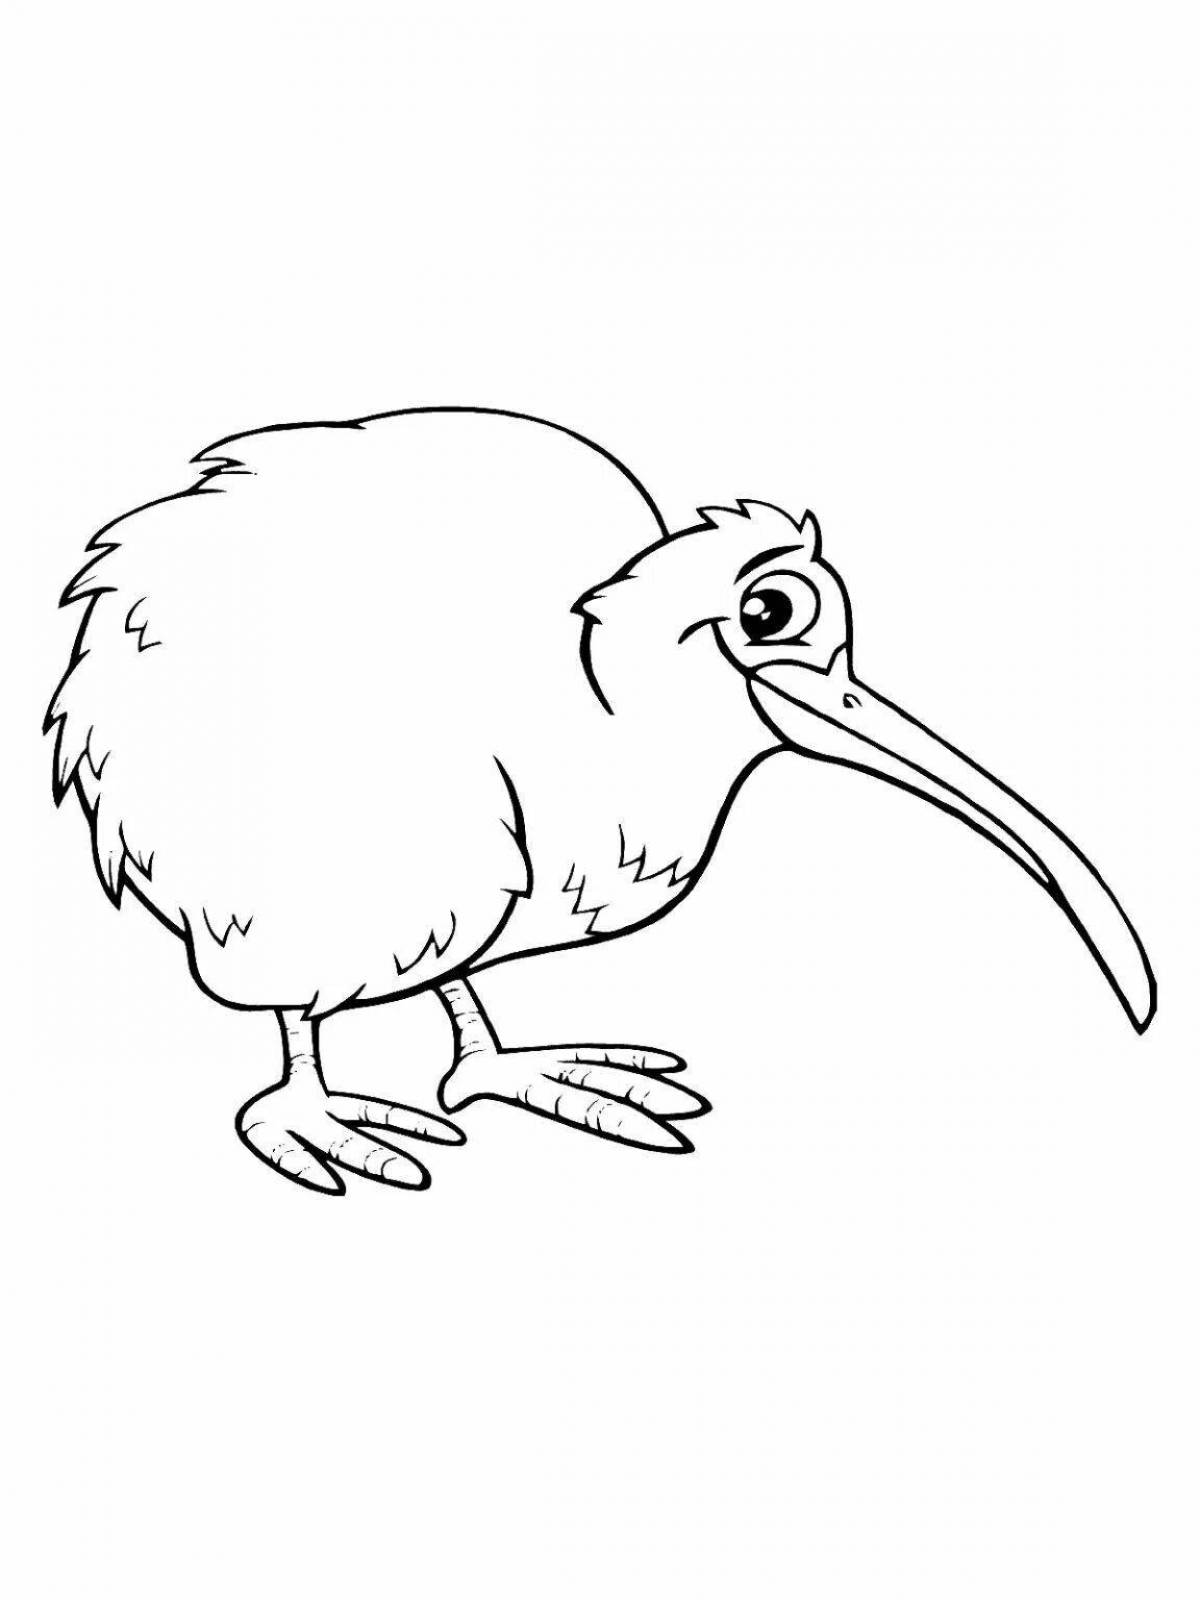 Color live kiwi bird coloring book